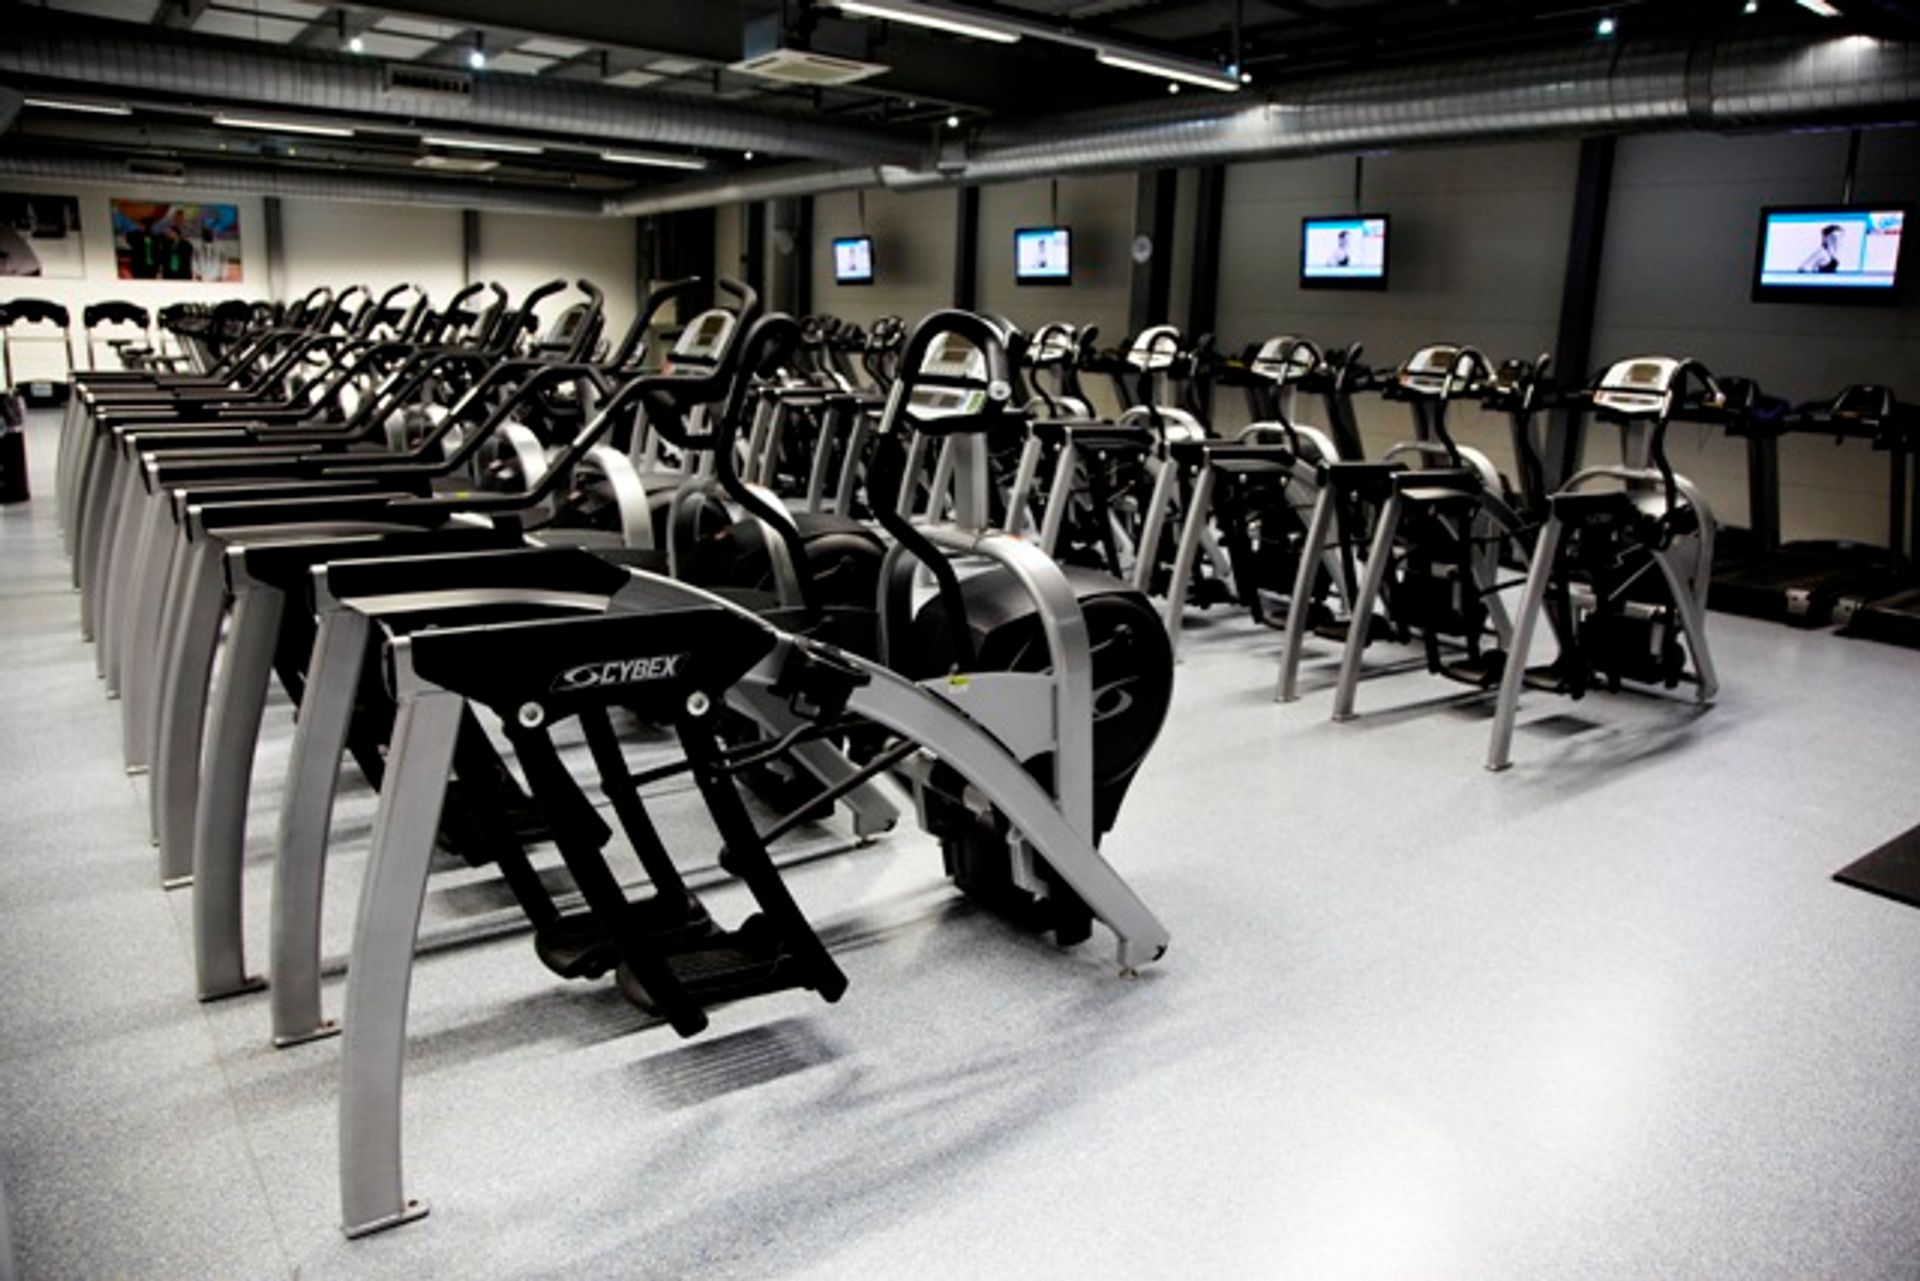 Rows of treadmills.